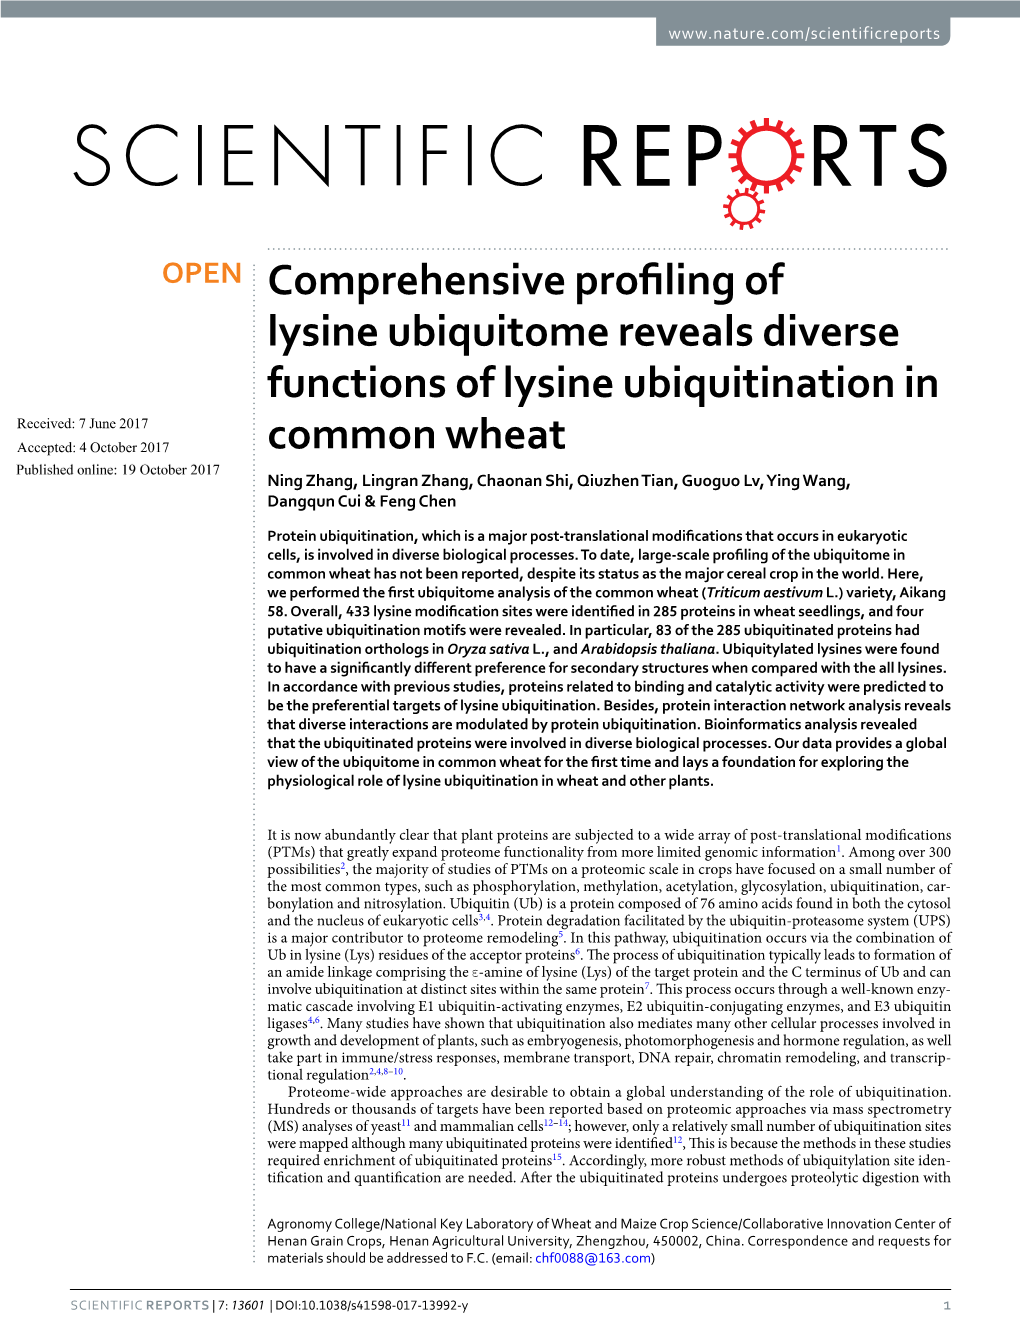 Comprehensive Profiling of Lysine Ubiquitome Reveals Diverse